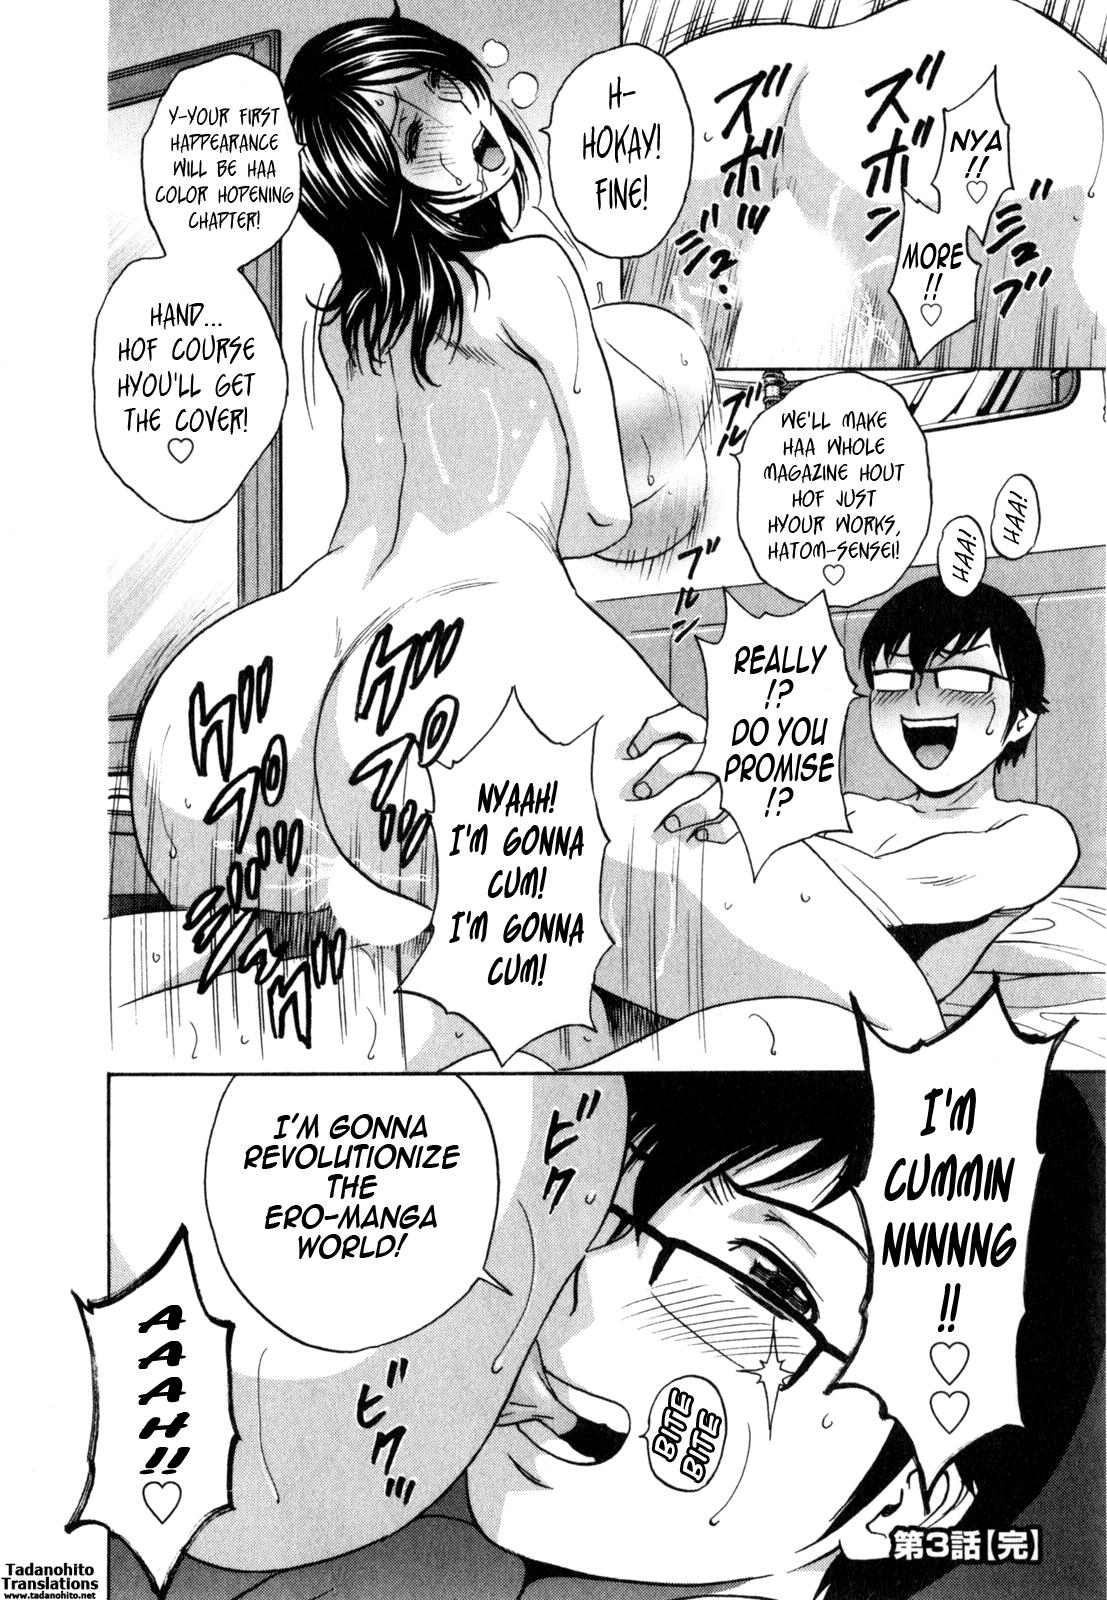 [Hidemaru] Life with Married Women Just Like a Manga 3 - Ch. 1-8 [English] {Tadanohito} 64